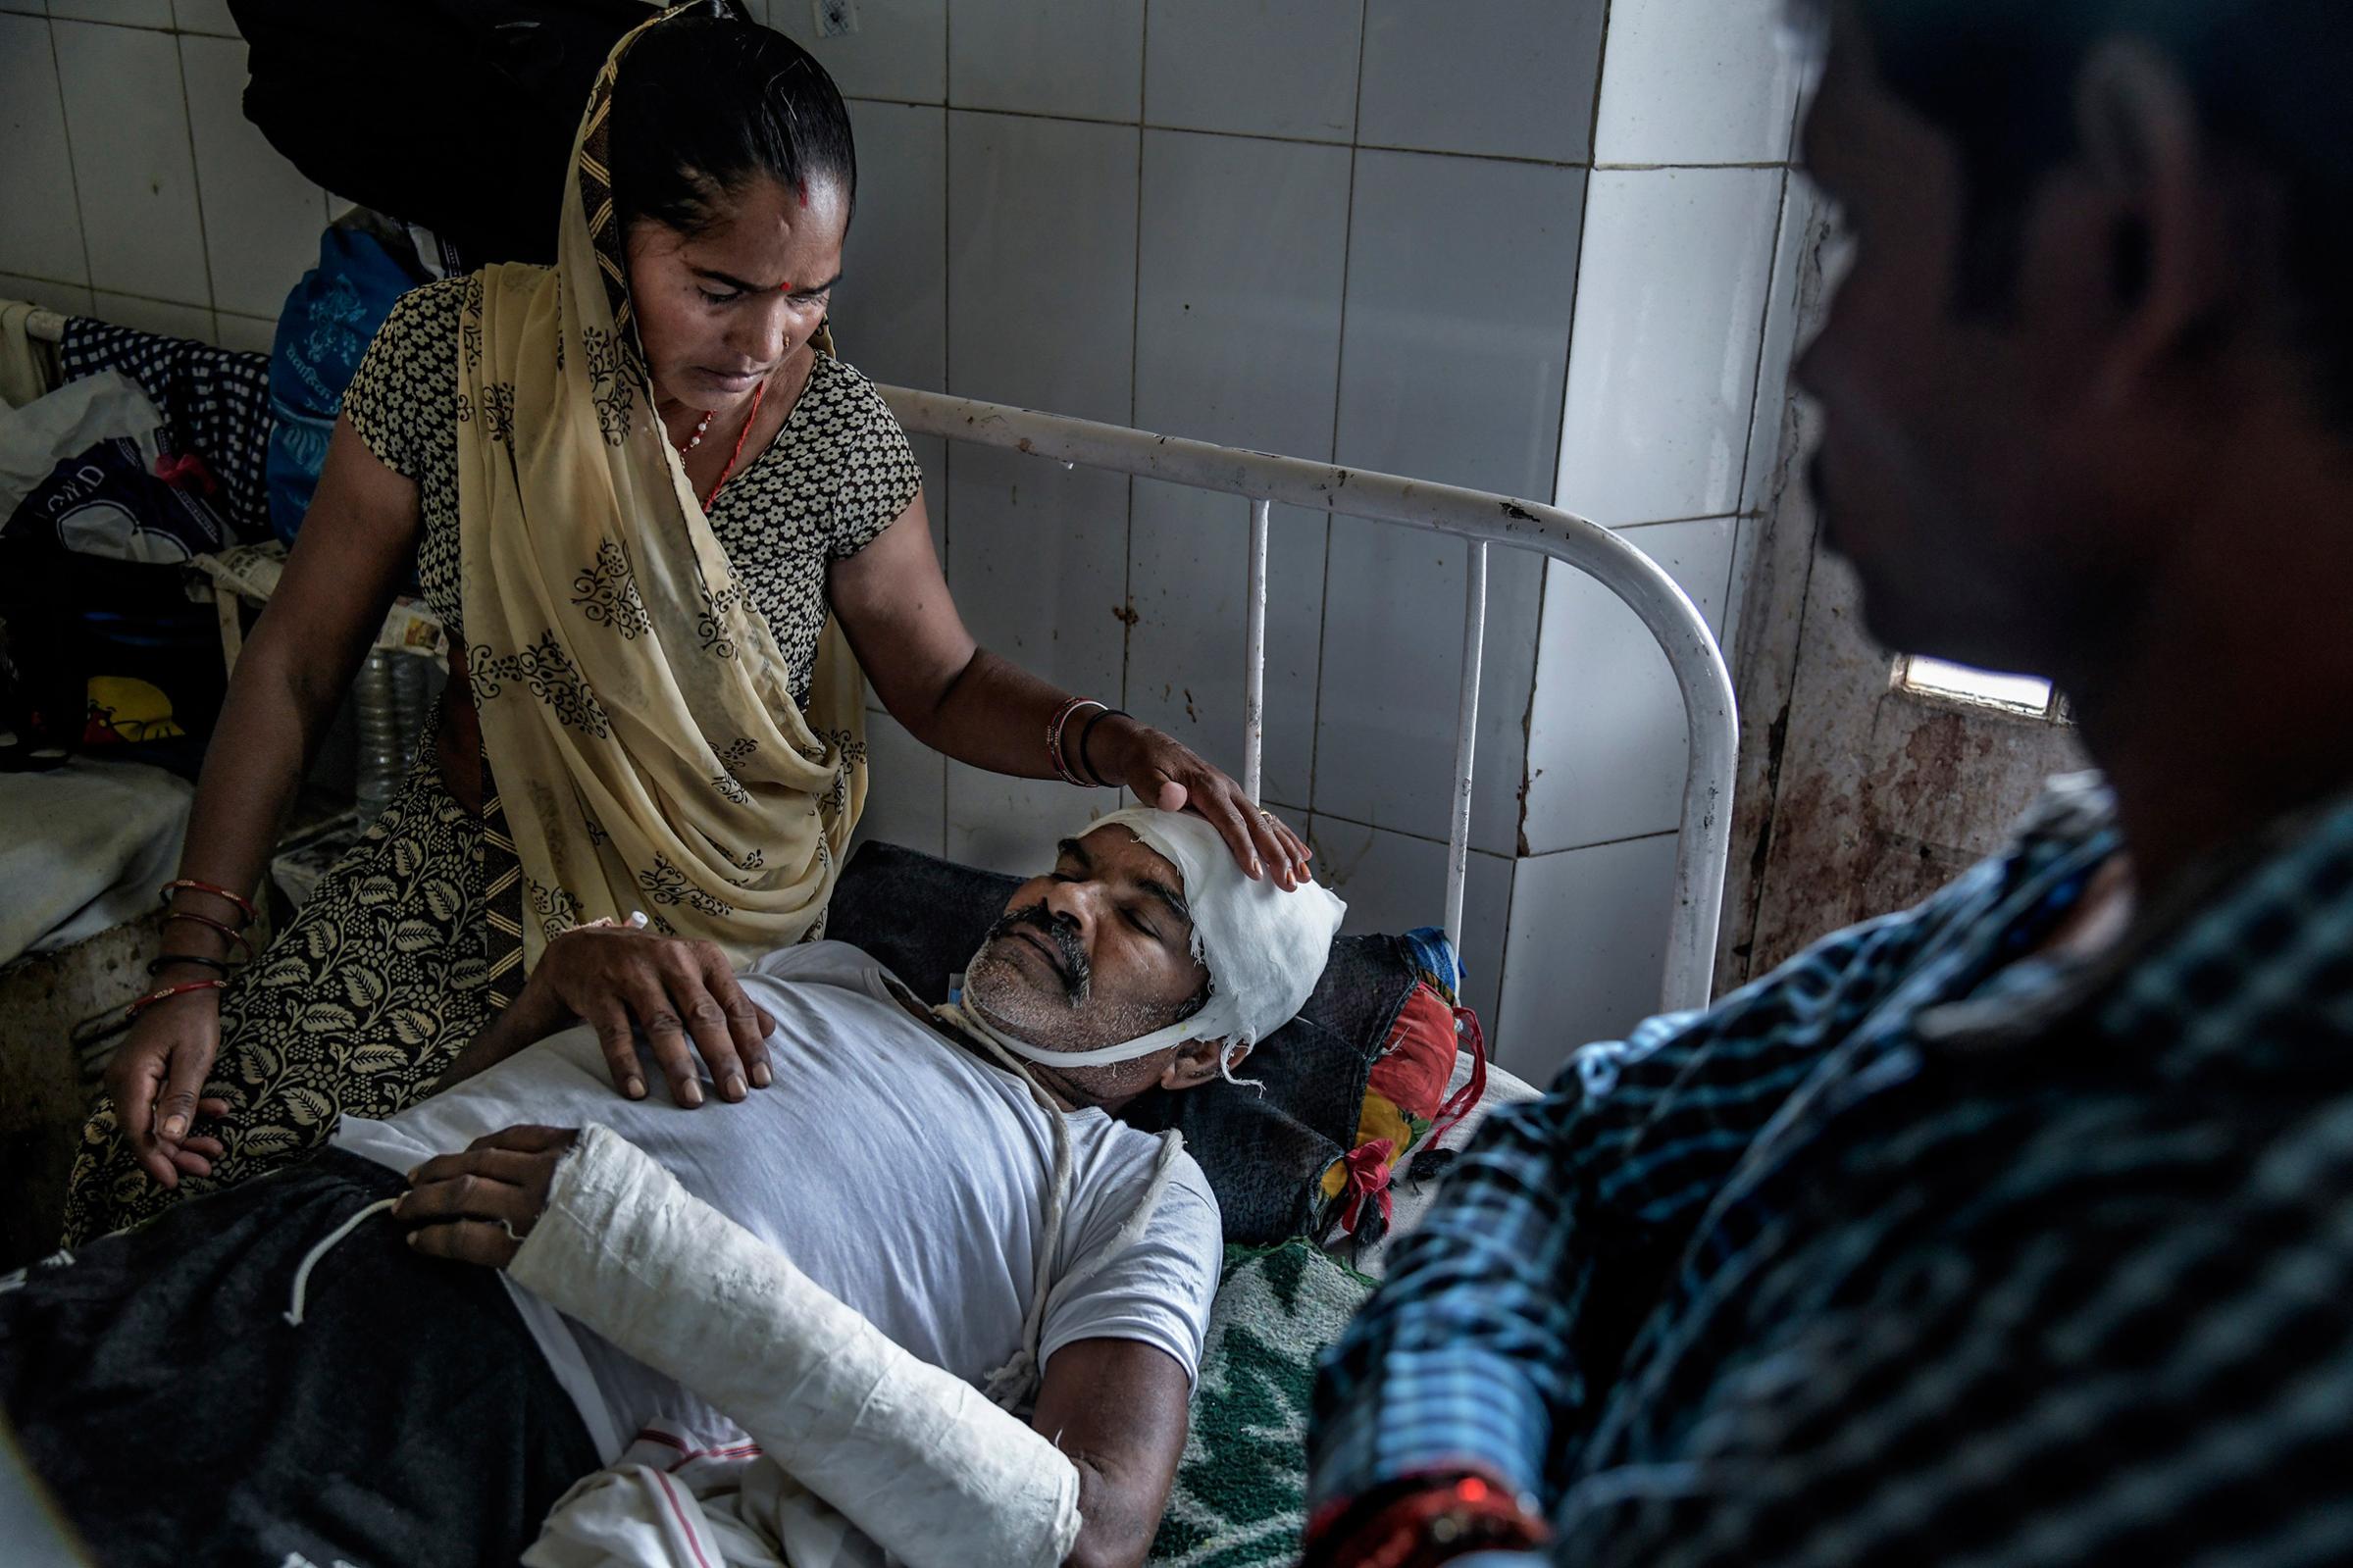 Sardar Singh Jatav recovers after an attack by higher-caste Hindu men in September 2018